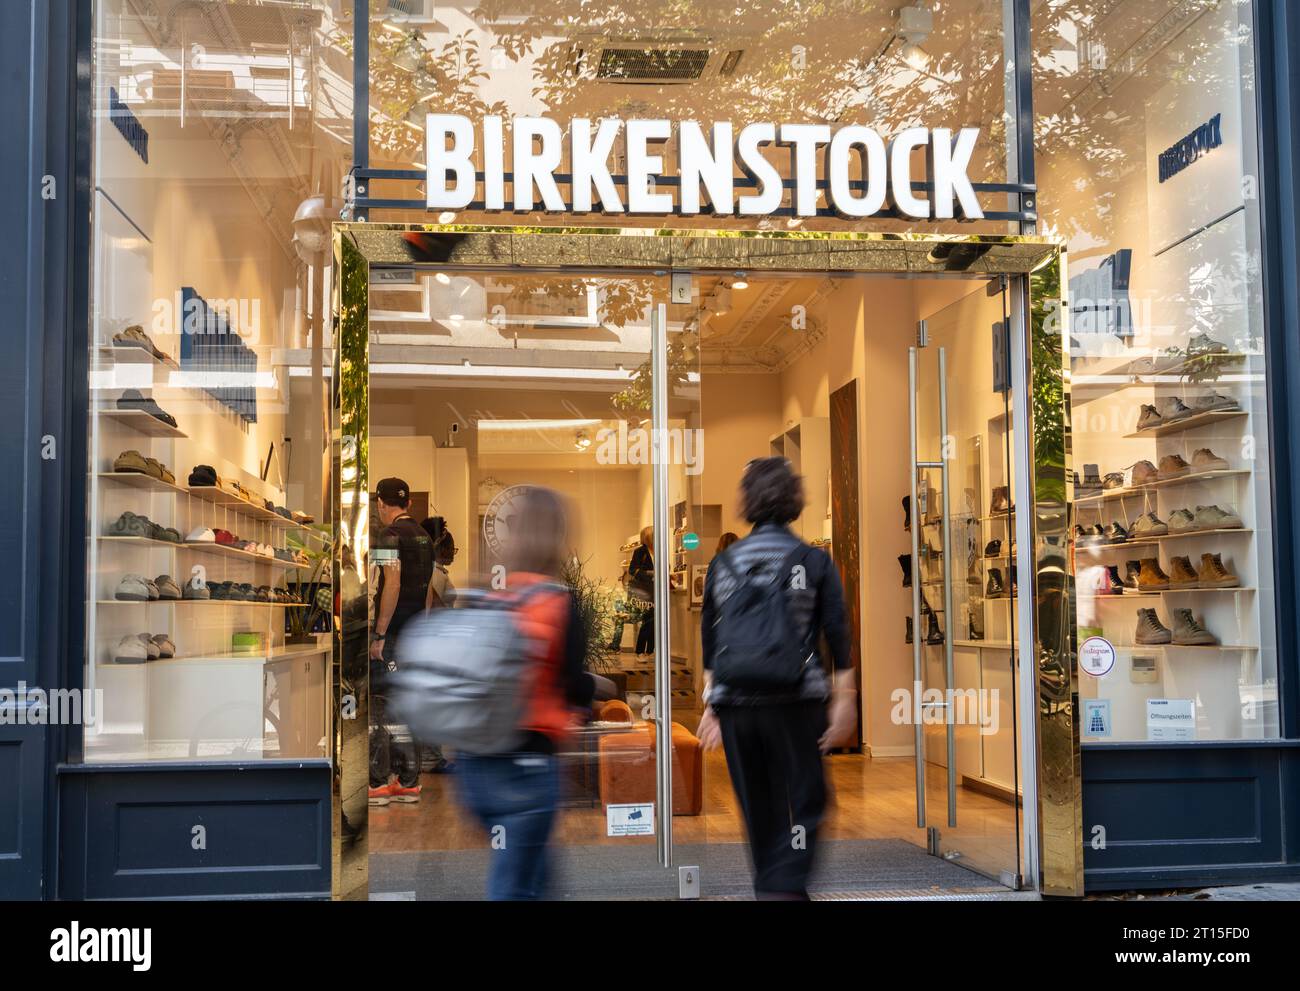 Berlin Germany June 20 2018 Birkenstock Stock Photo 1140912704